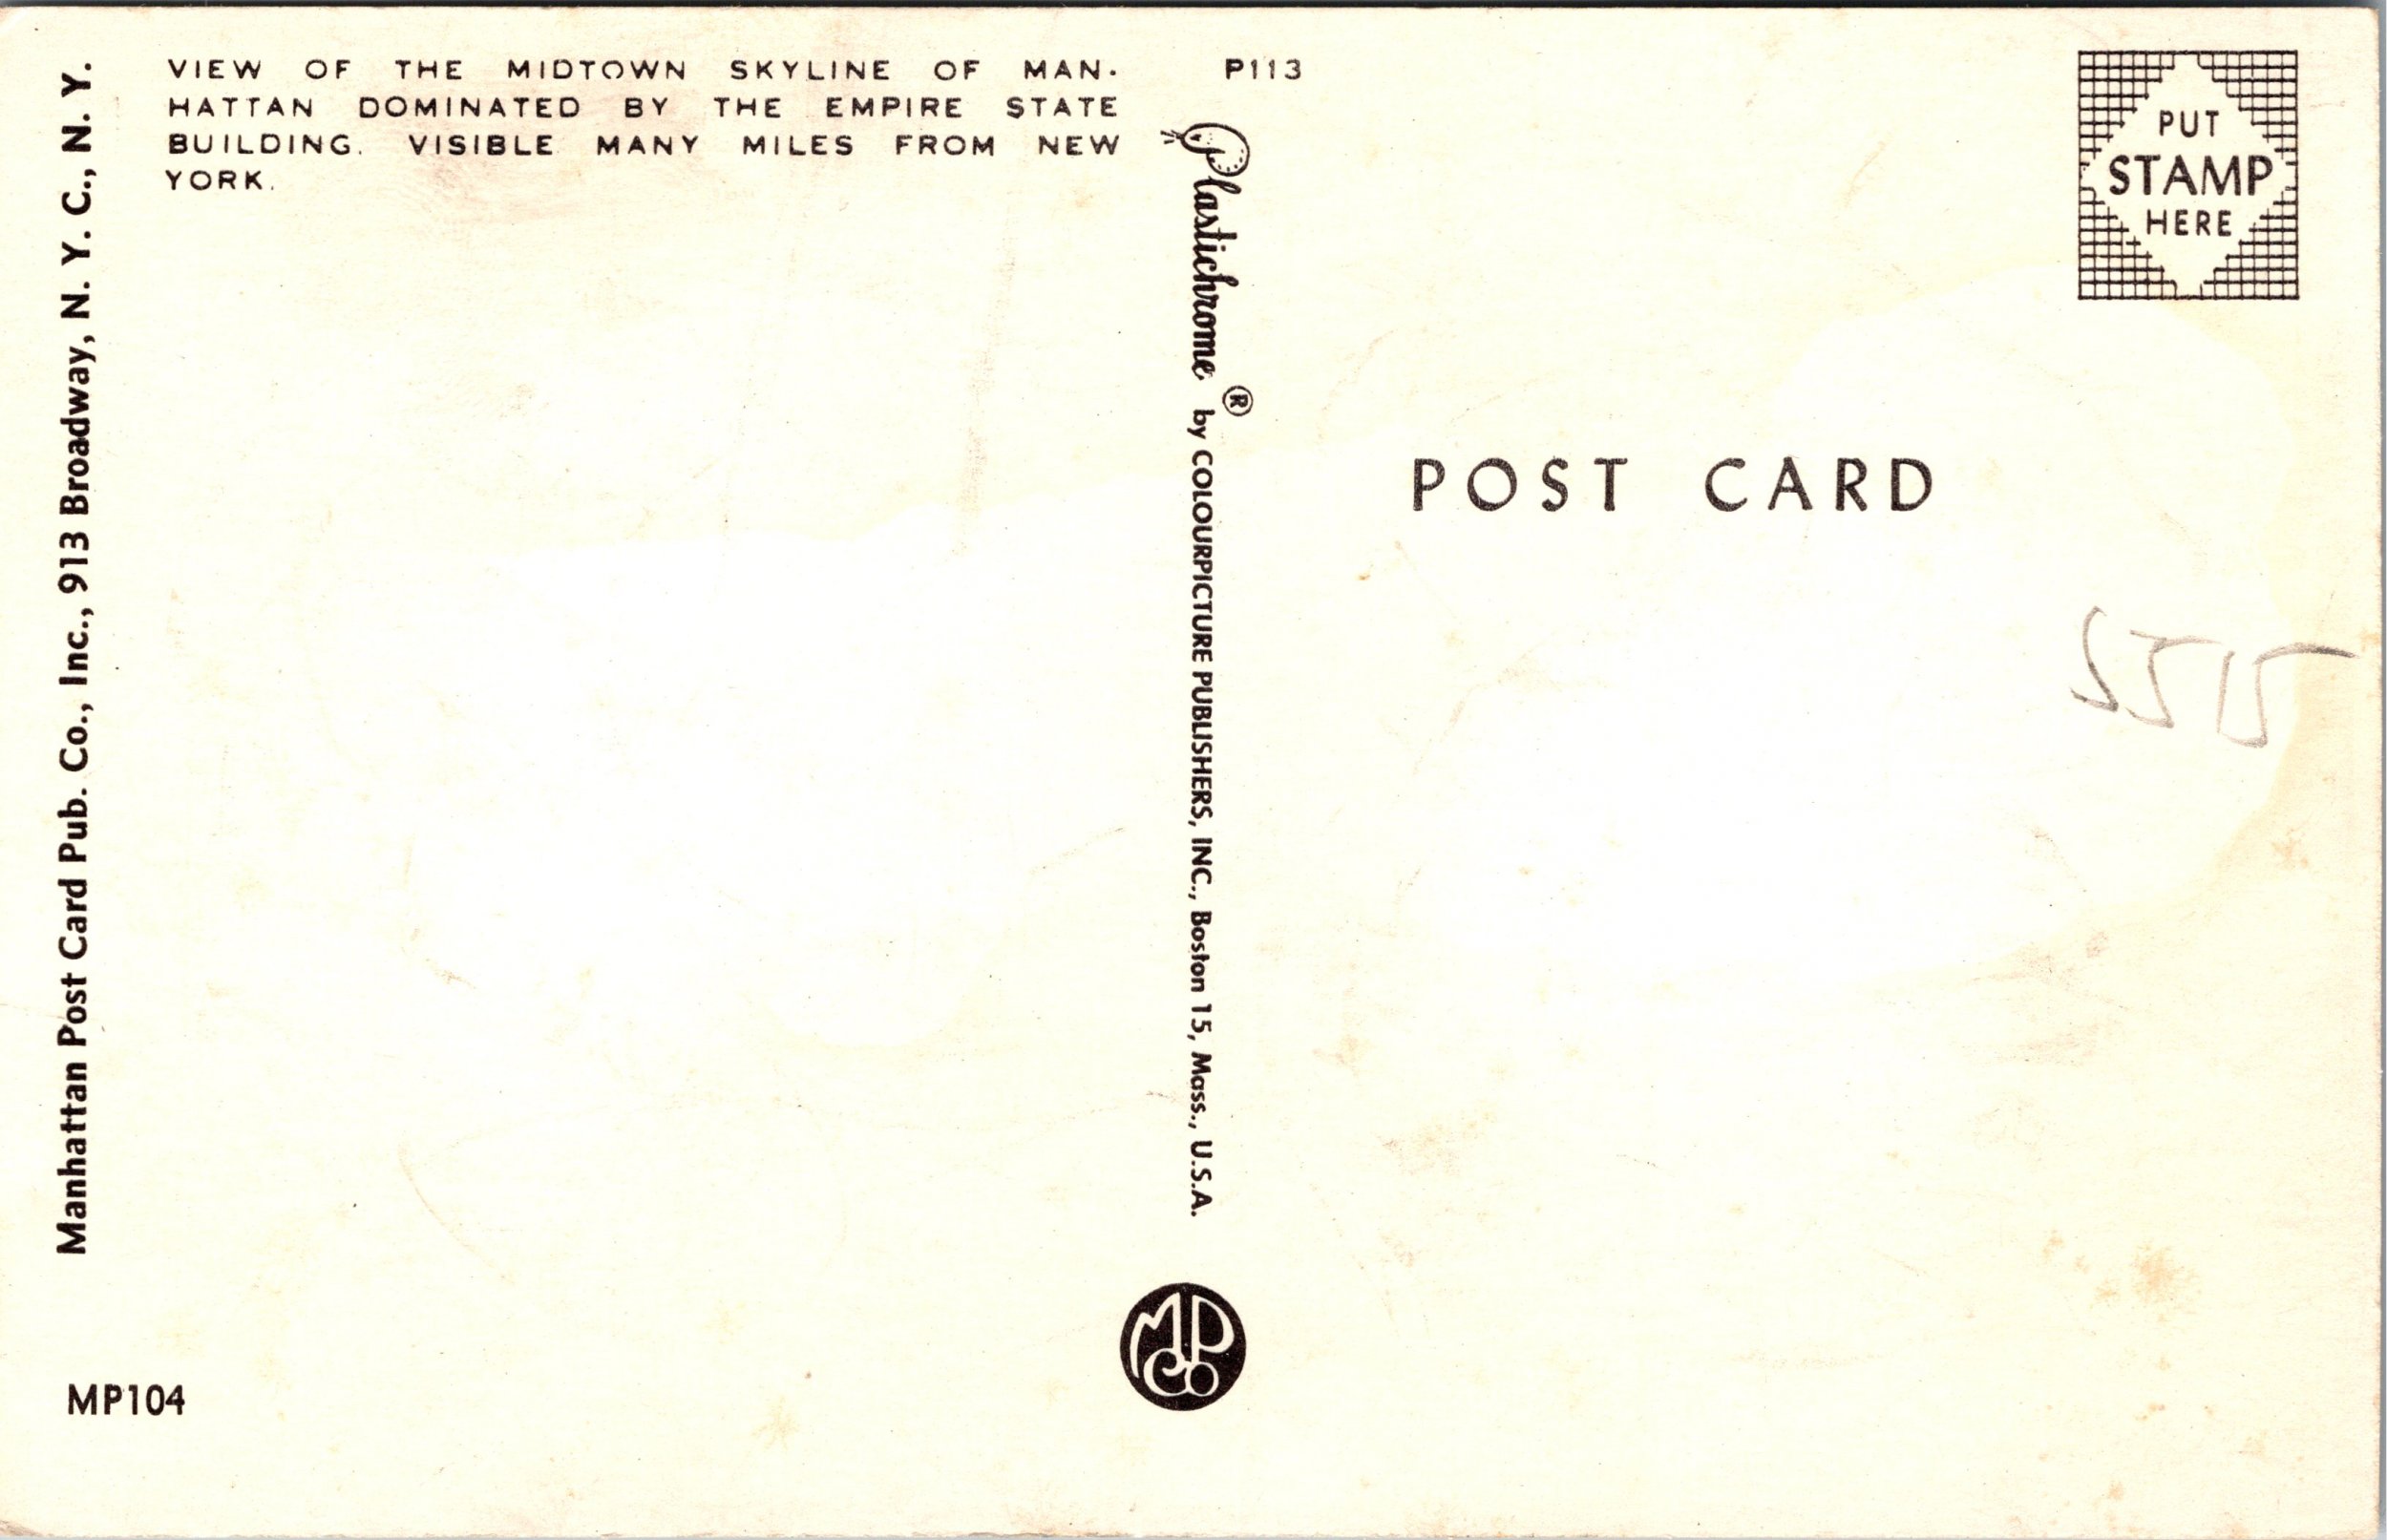 Manhattan New York City Midtown Skyline | Vintage & Antique Postcards 🗺 📷  🎠 | Send real postcards online